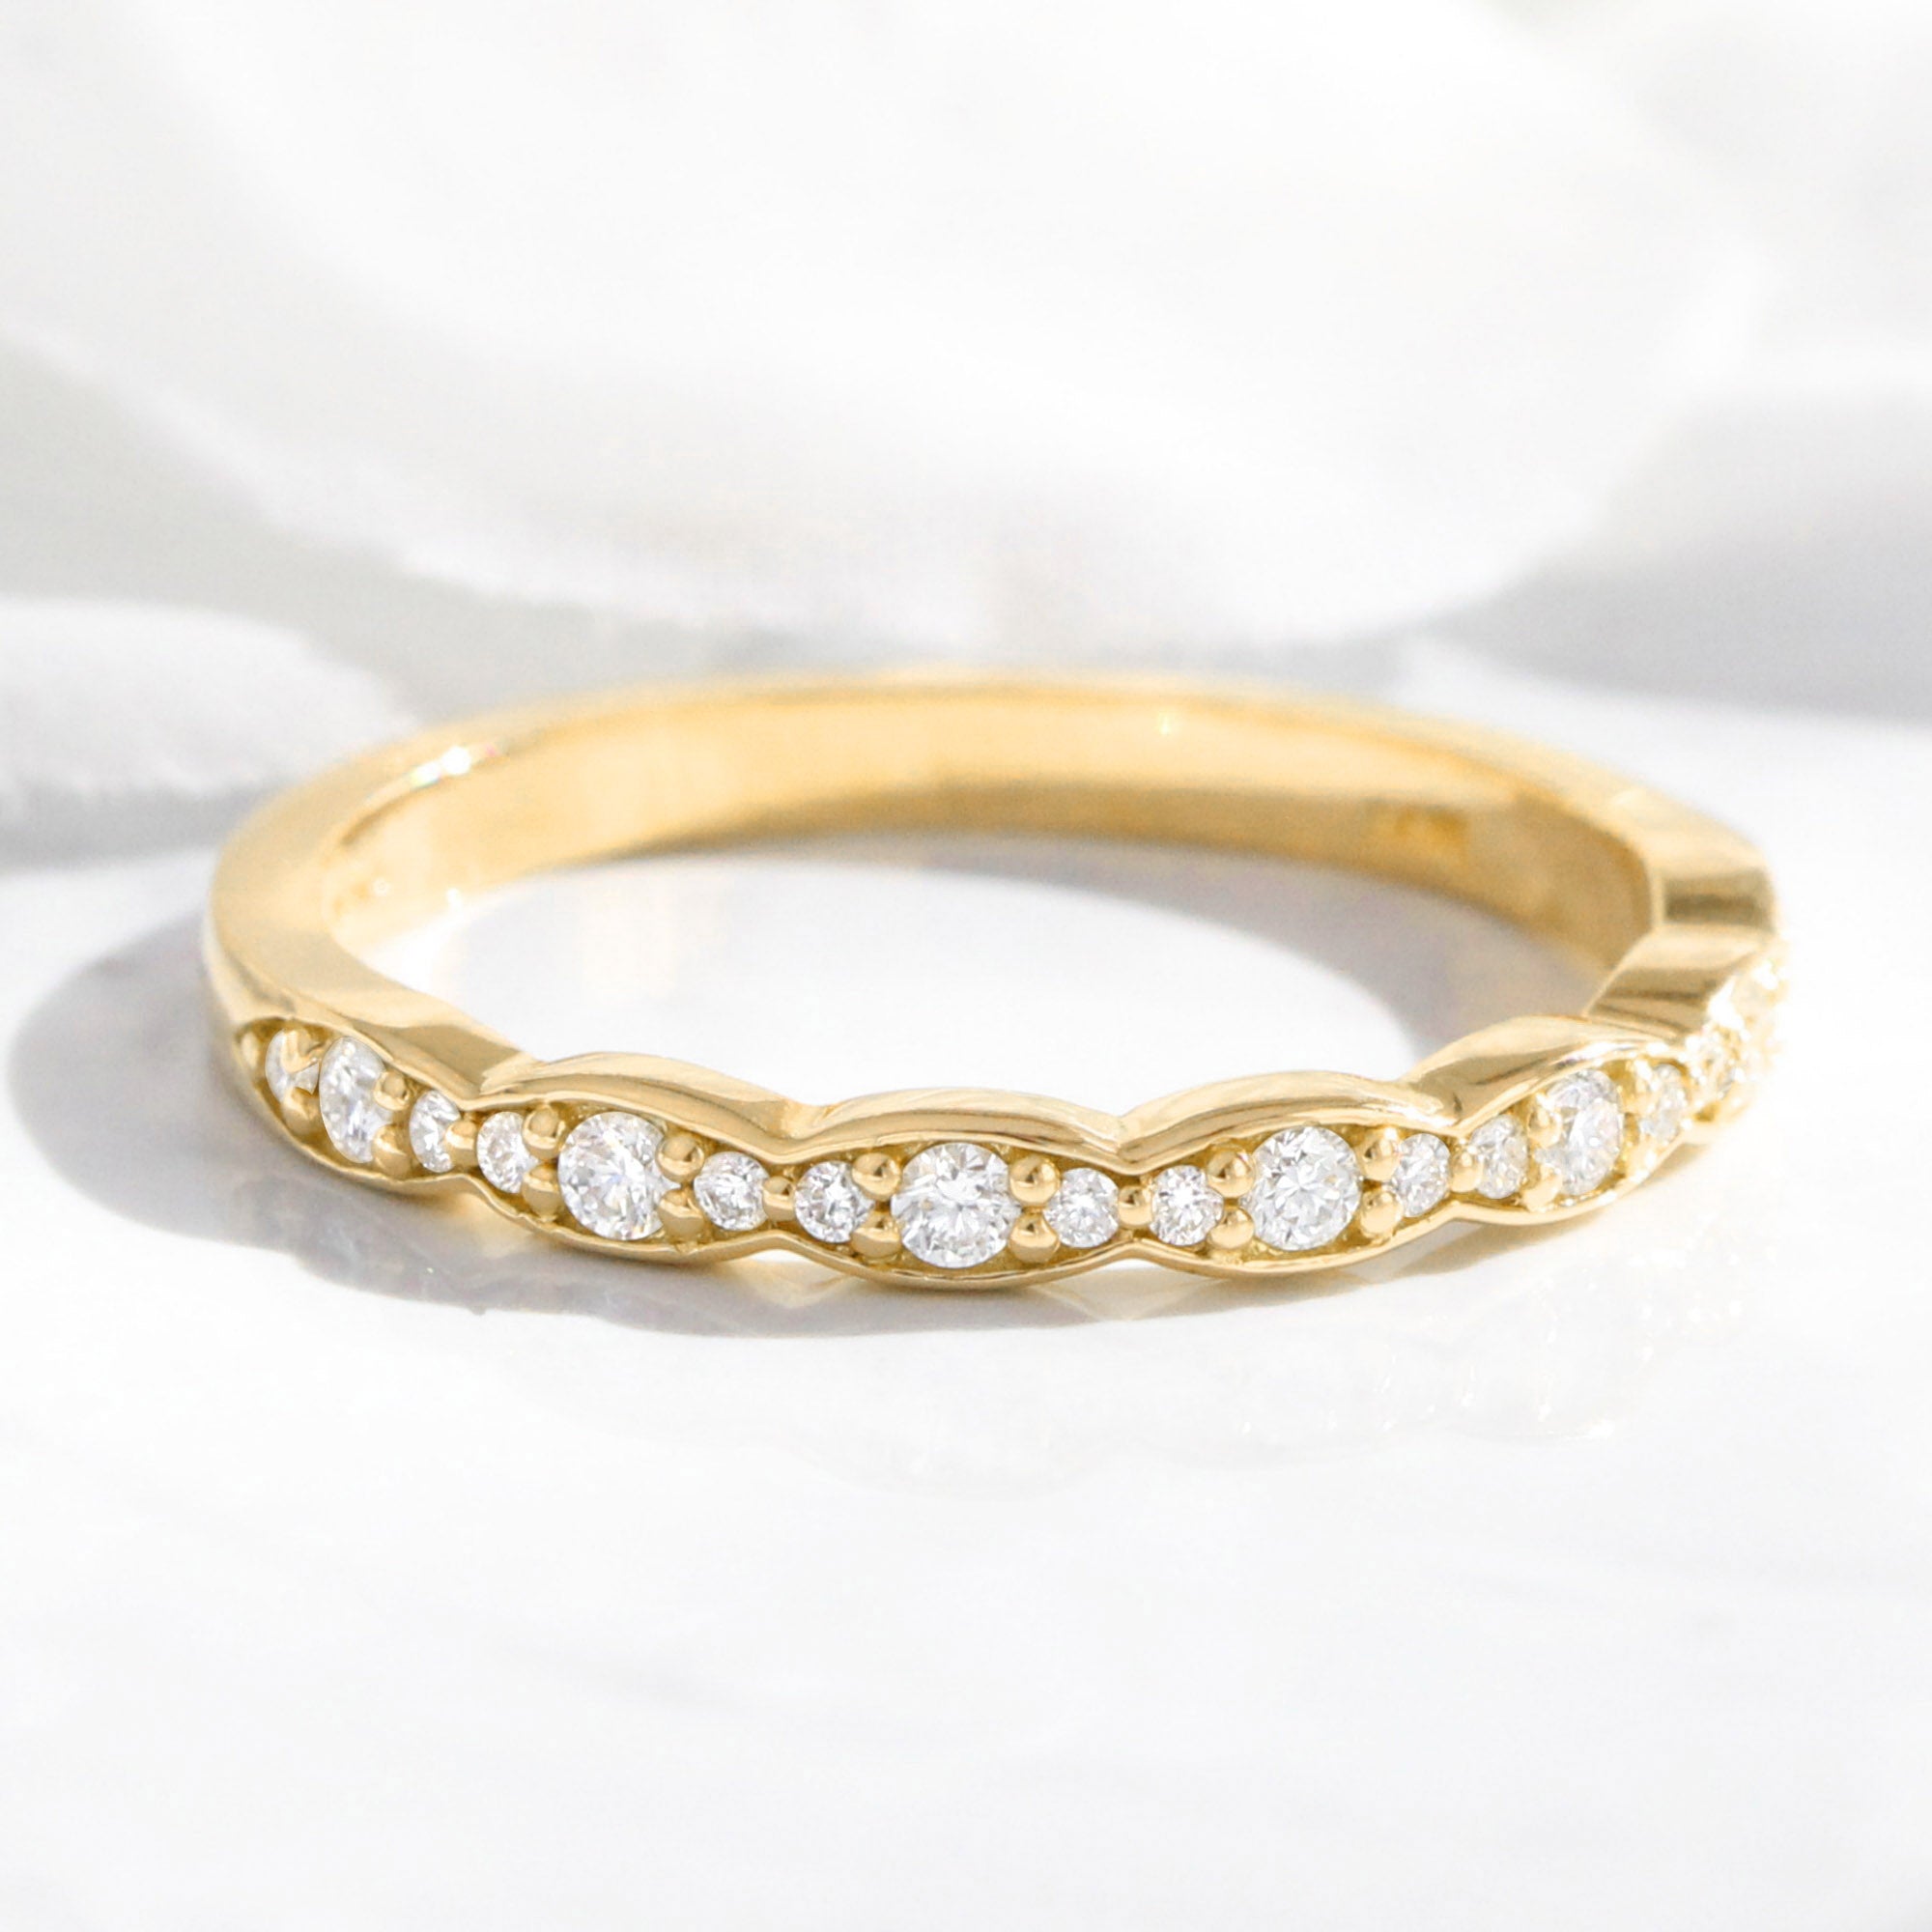 Scalloped diamond wedding ring yellow gold half eternity band by la more design jewelry